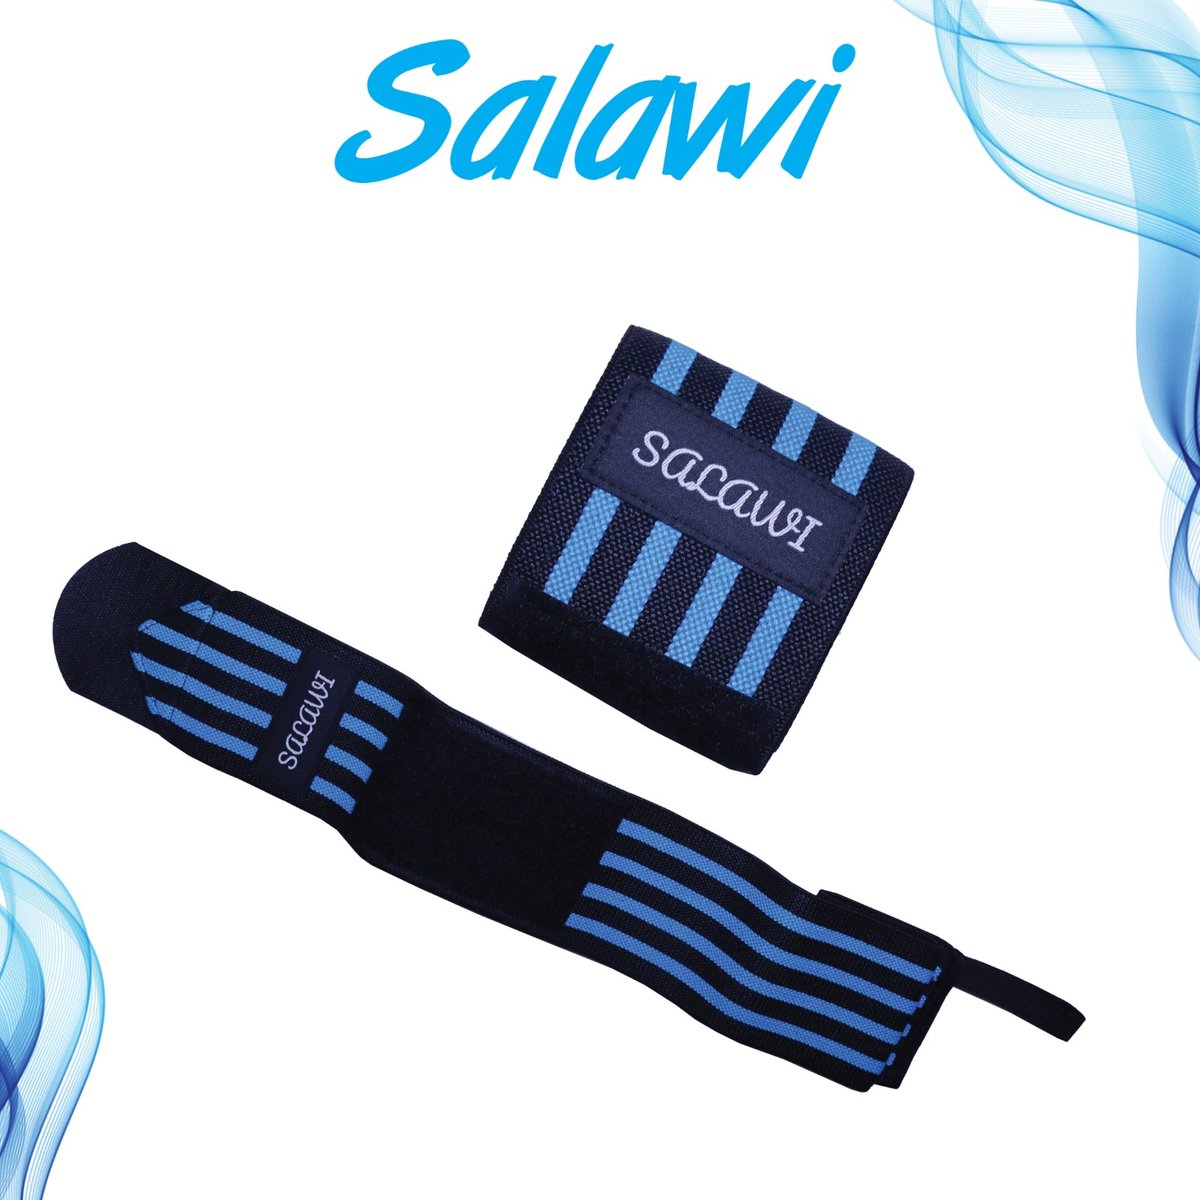 Salawi 2x - Polsband Polsbrace - Wrist wraps - Krachttraining - Fitness & CrossFit - gewichtheffen - Polsbrace voor Heren en Dames - Polssteun - Polsbanden - Lifting Straps - Powerlifting - - Bootcamp - Yoga - PolsbandLichtblauwe & Zwart